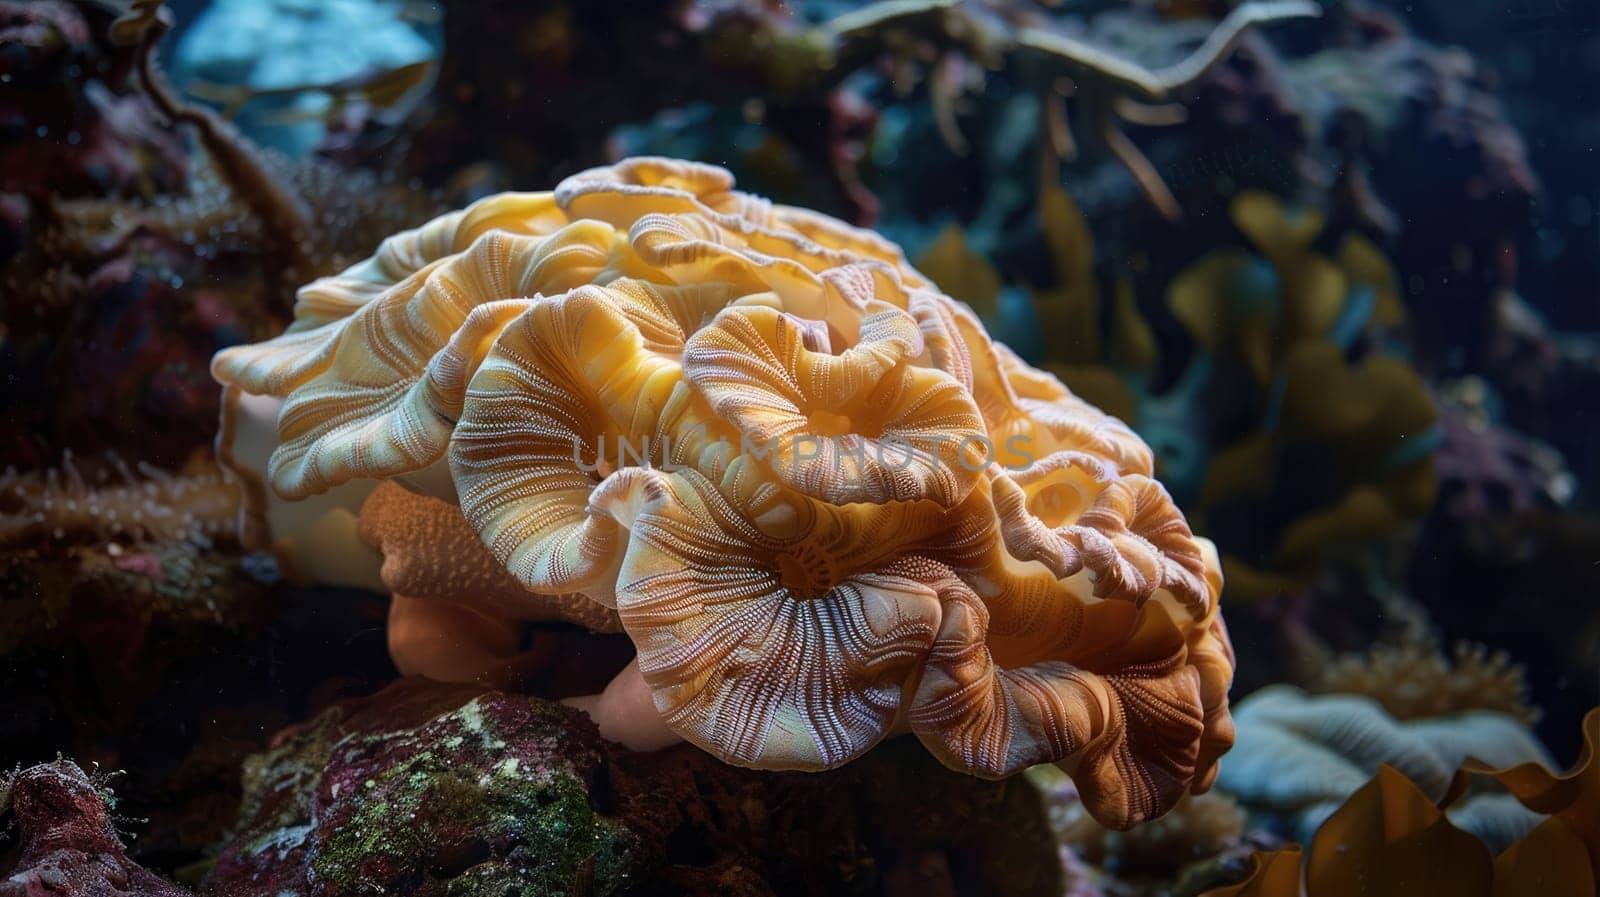 A brainlike organism found on coral reefs underwater by natali_brill